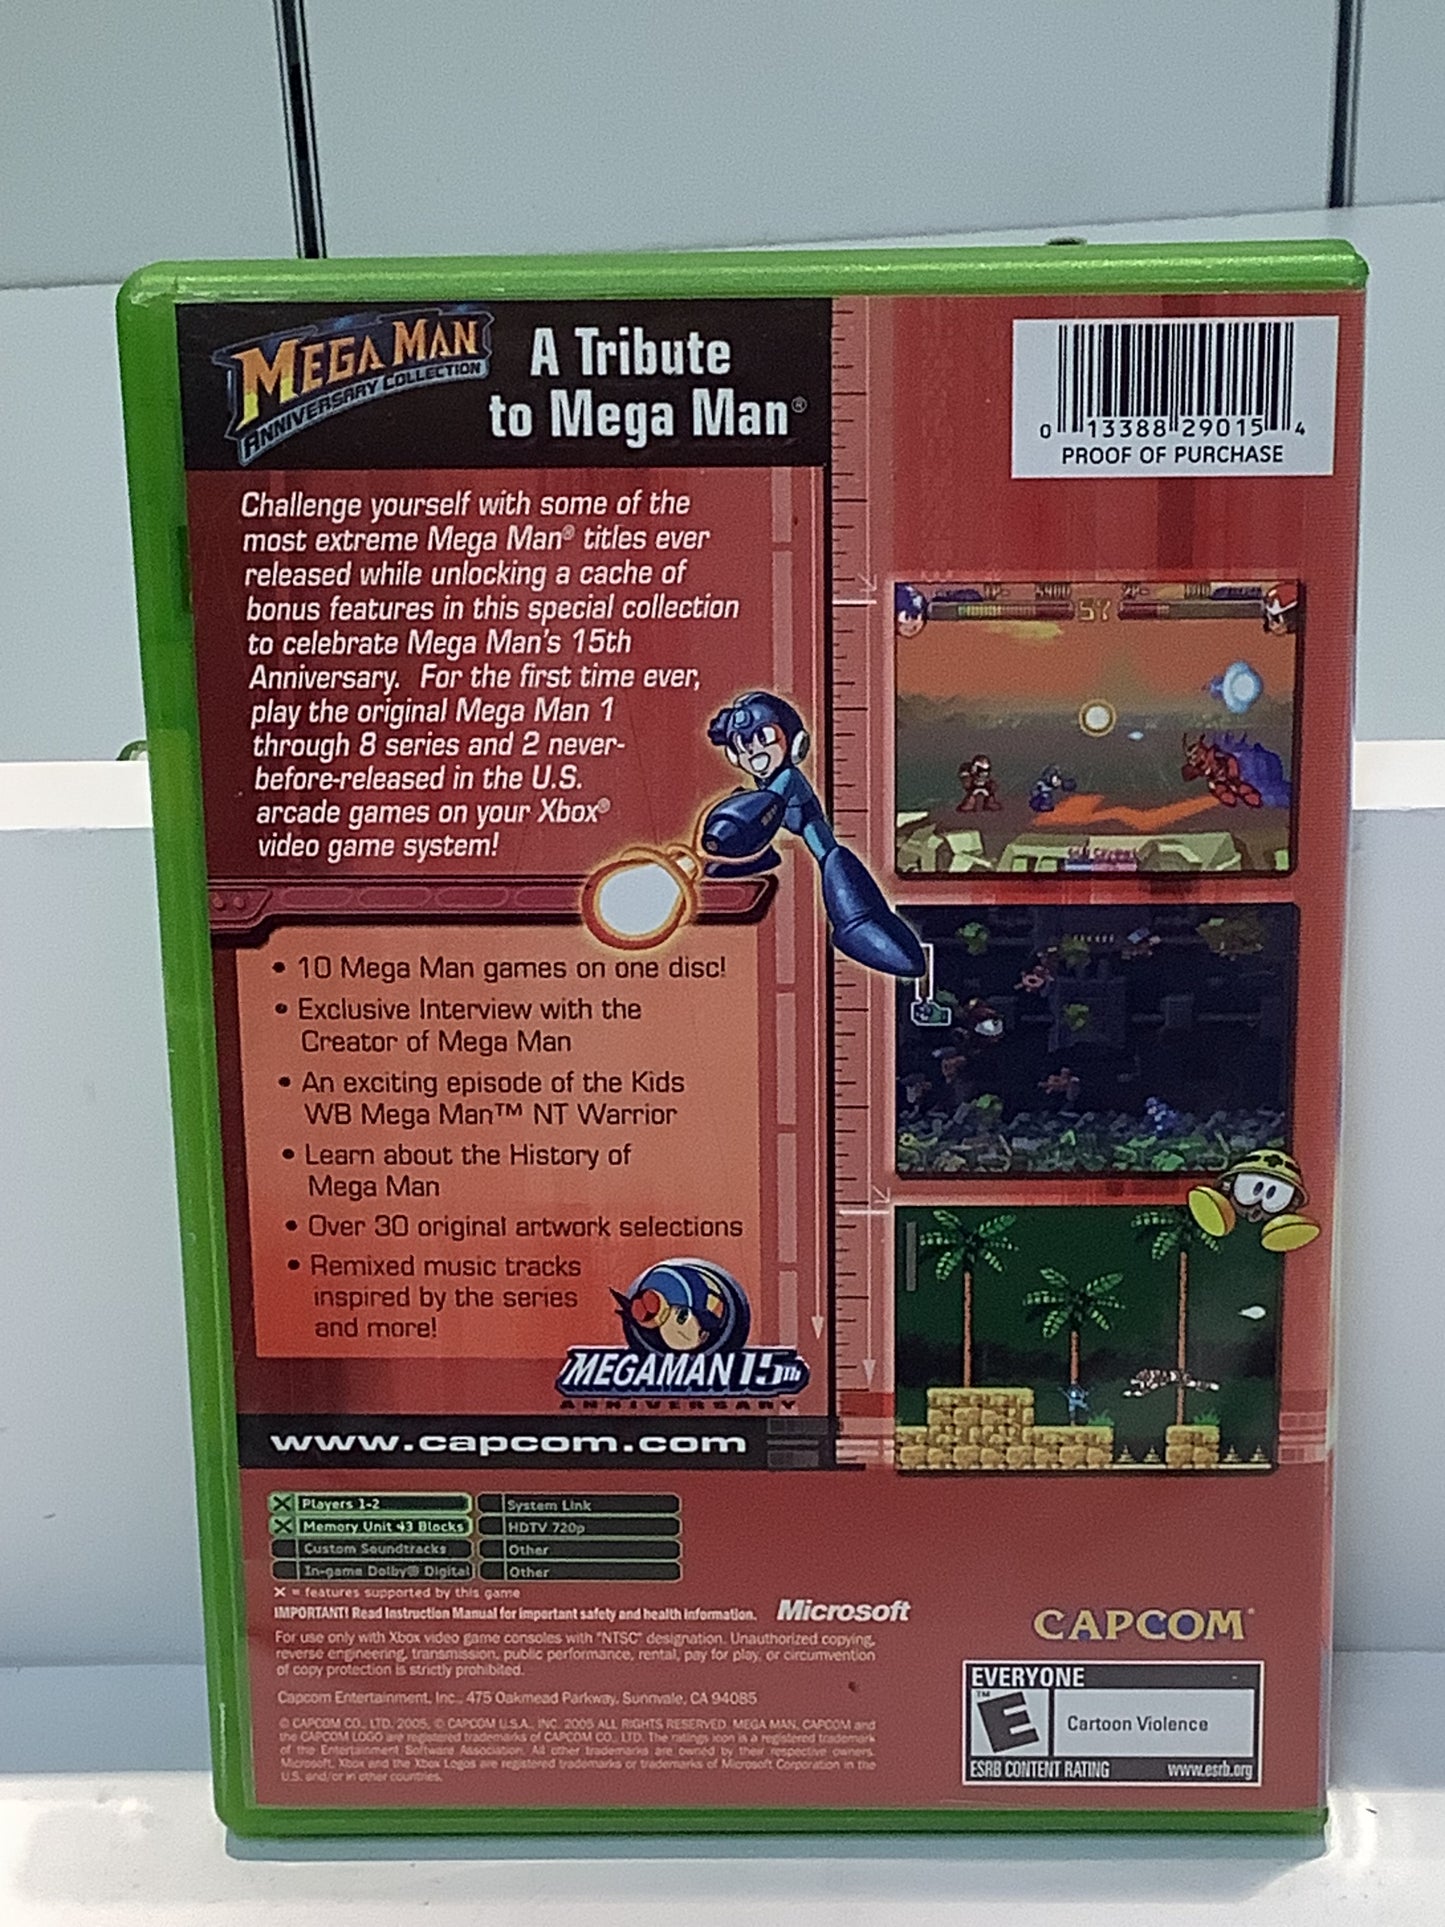 Mega Man Anniversary Collection - Xbox